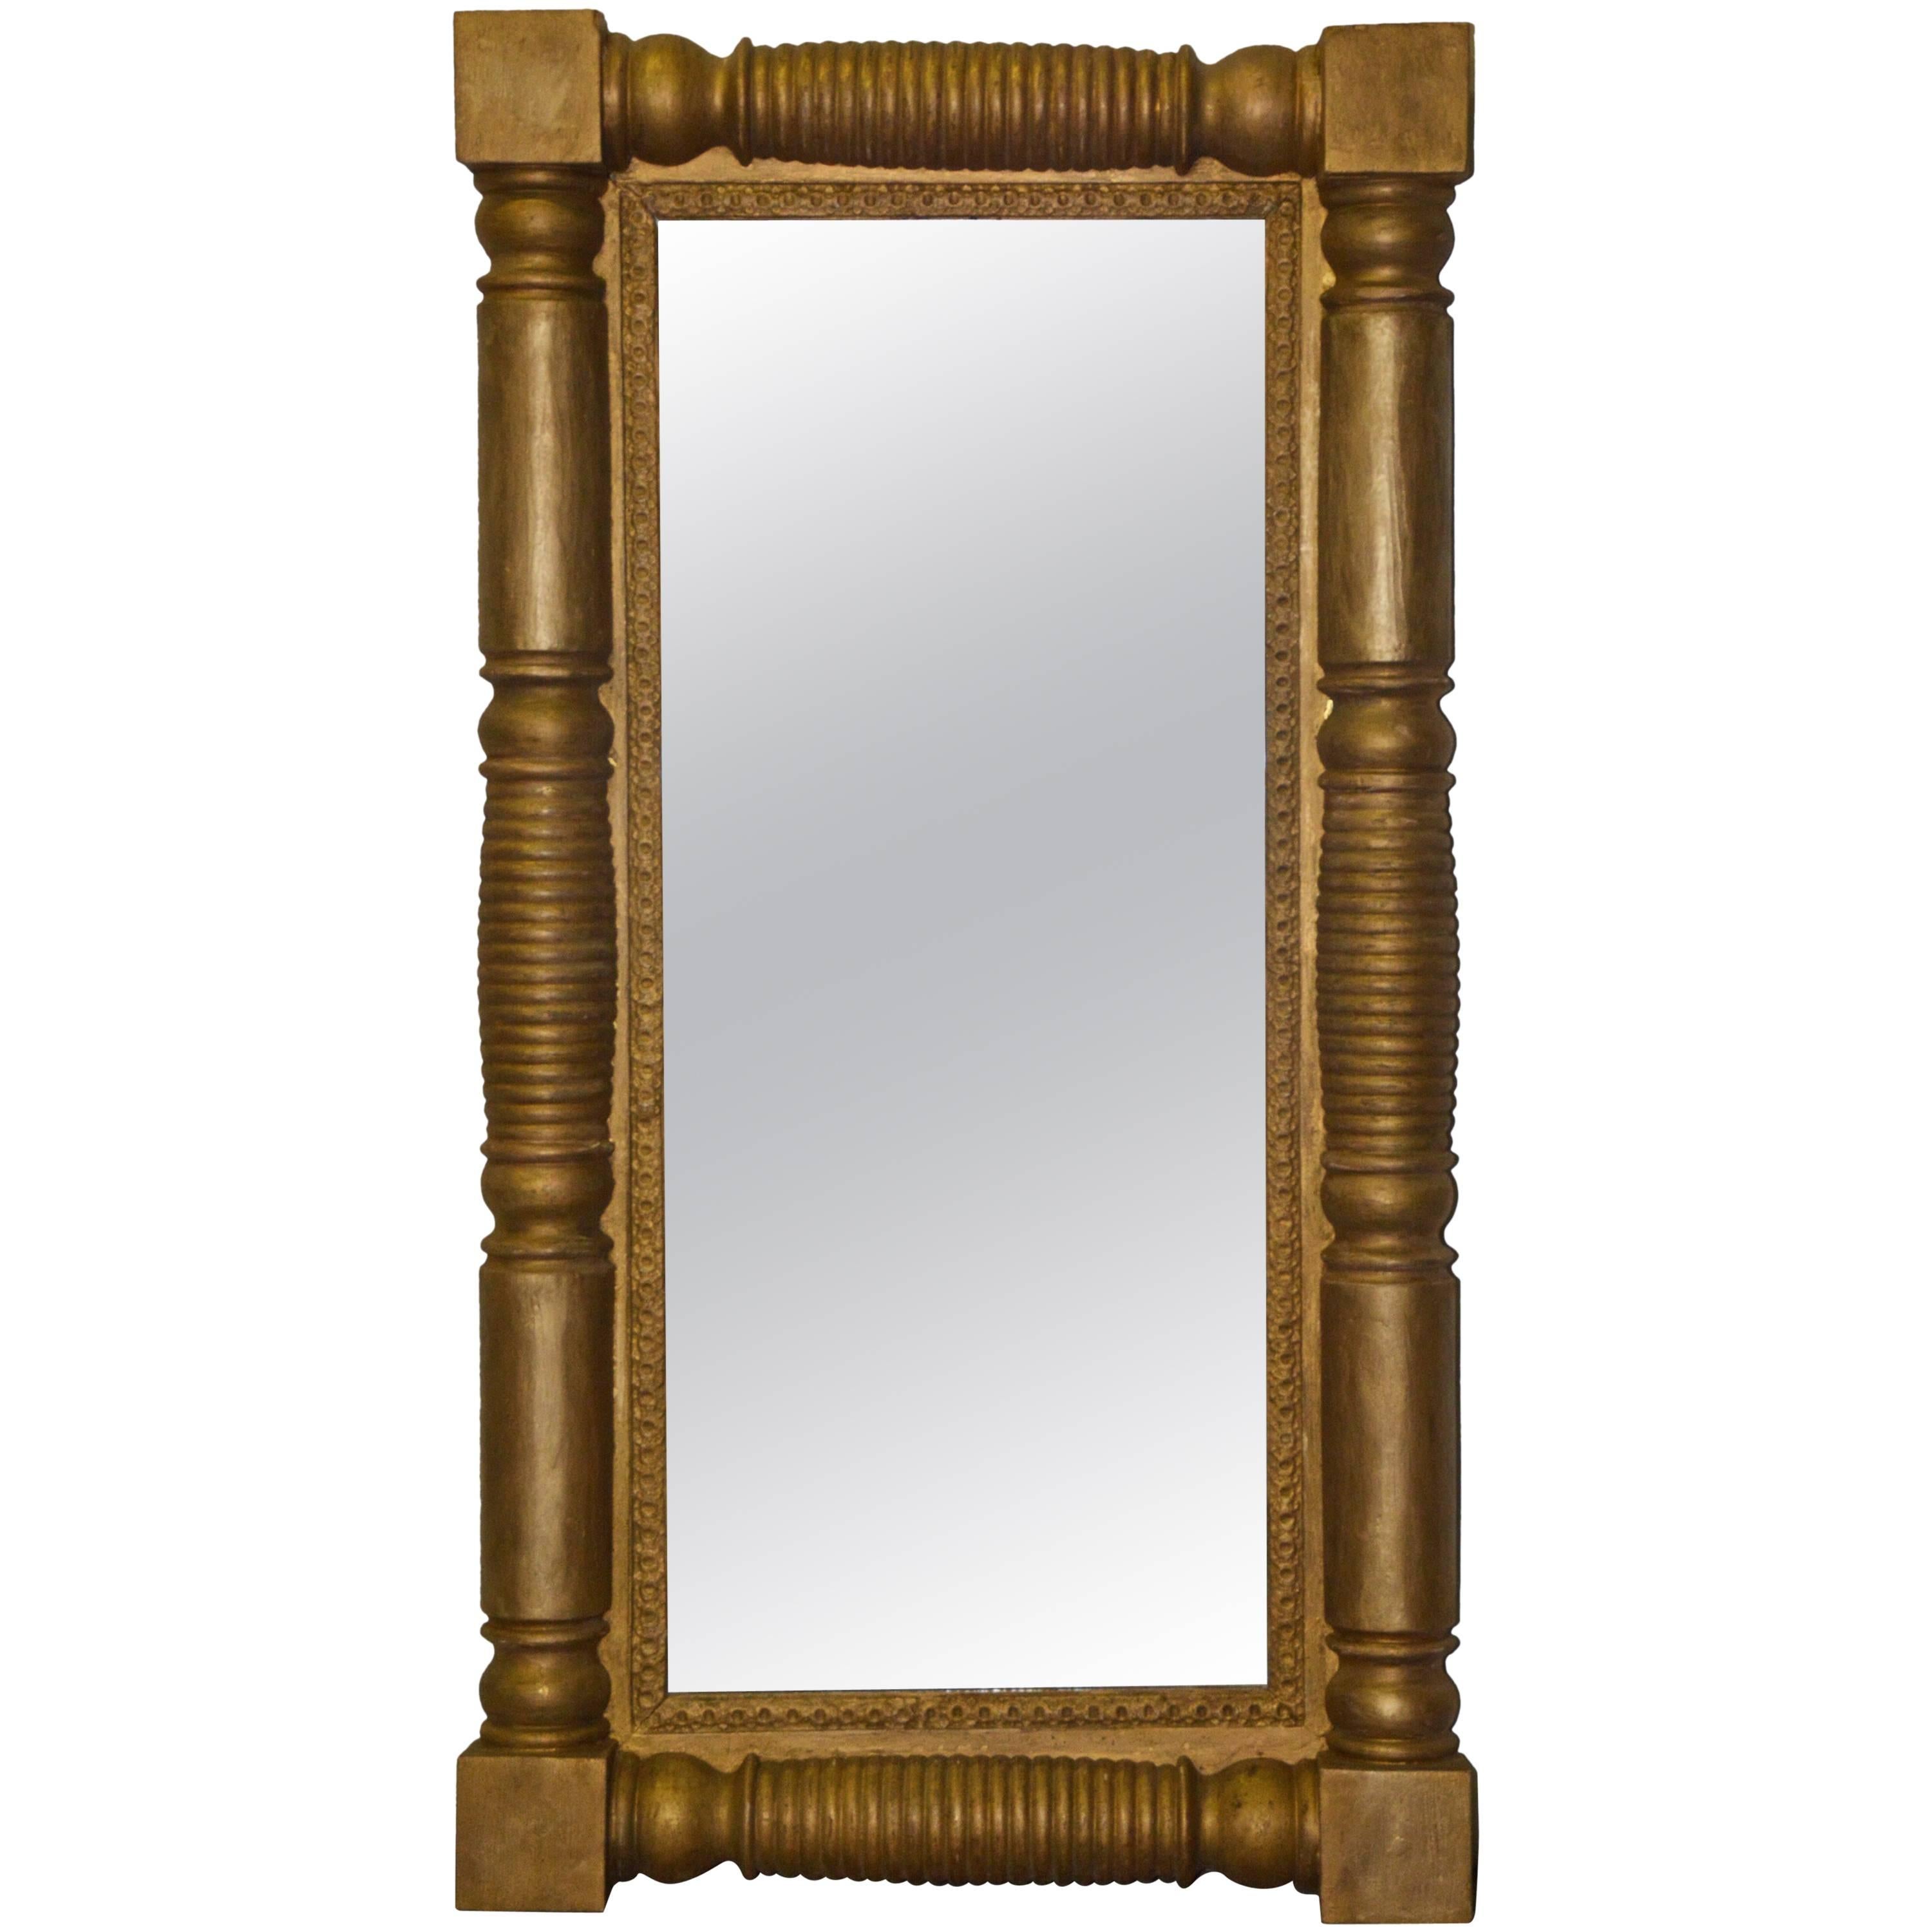 Grand miroir doré de style fédéral